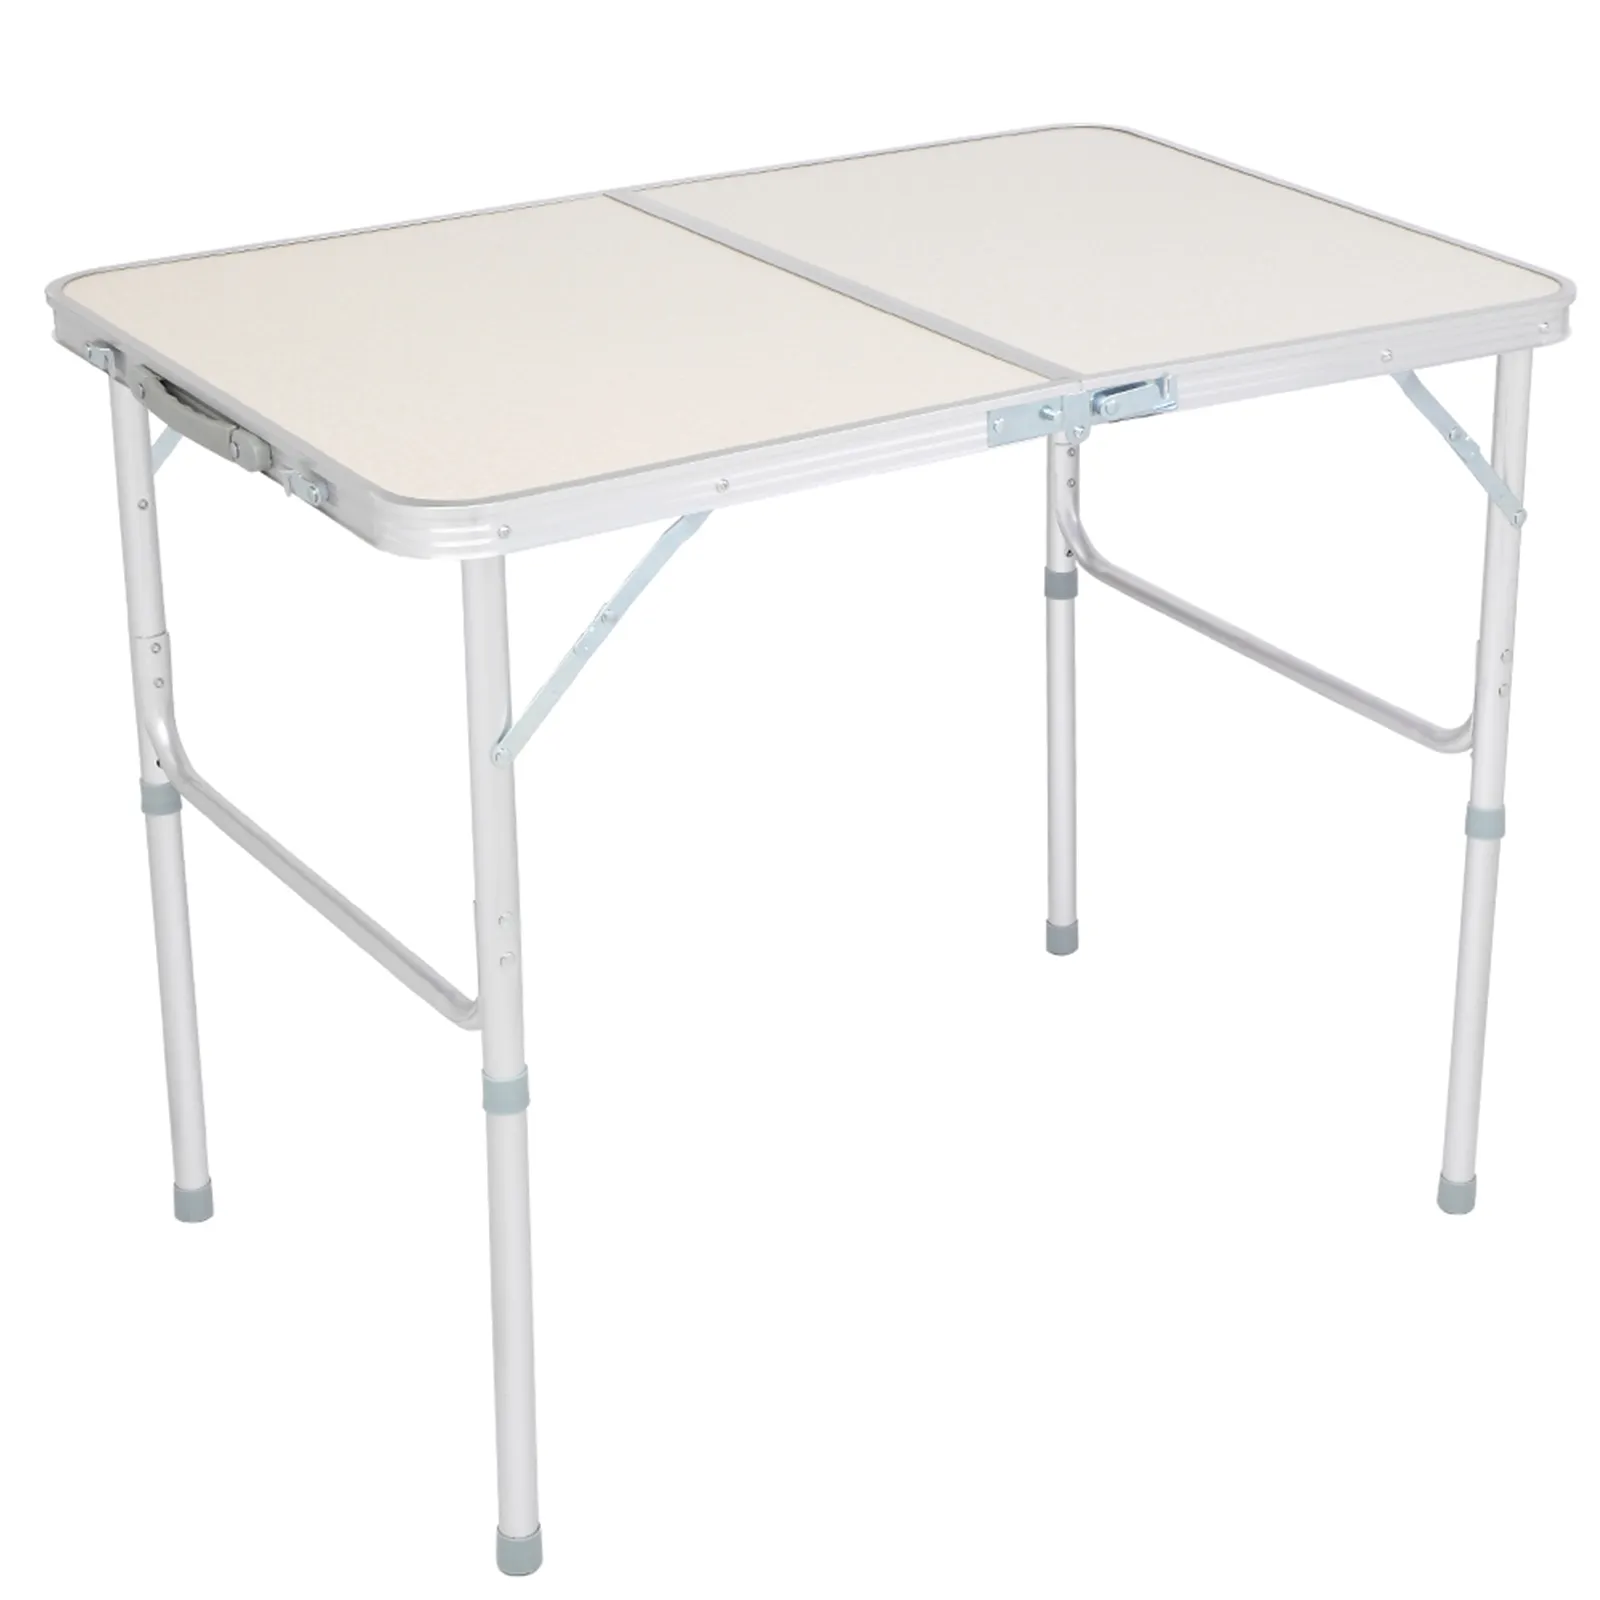 90 x 60 x 70cm Home Use Aluminum Alloy Folding Table White FREE SHIPPING